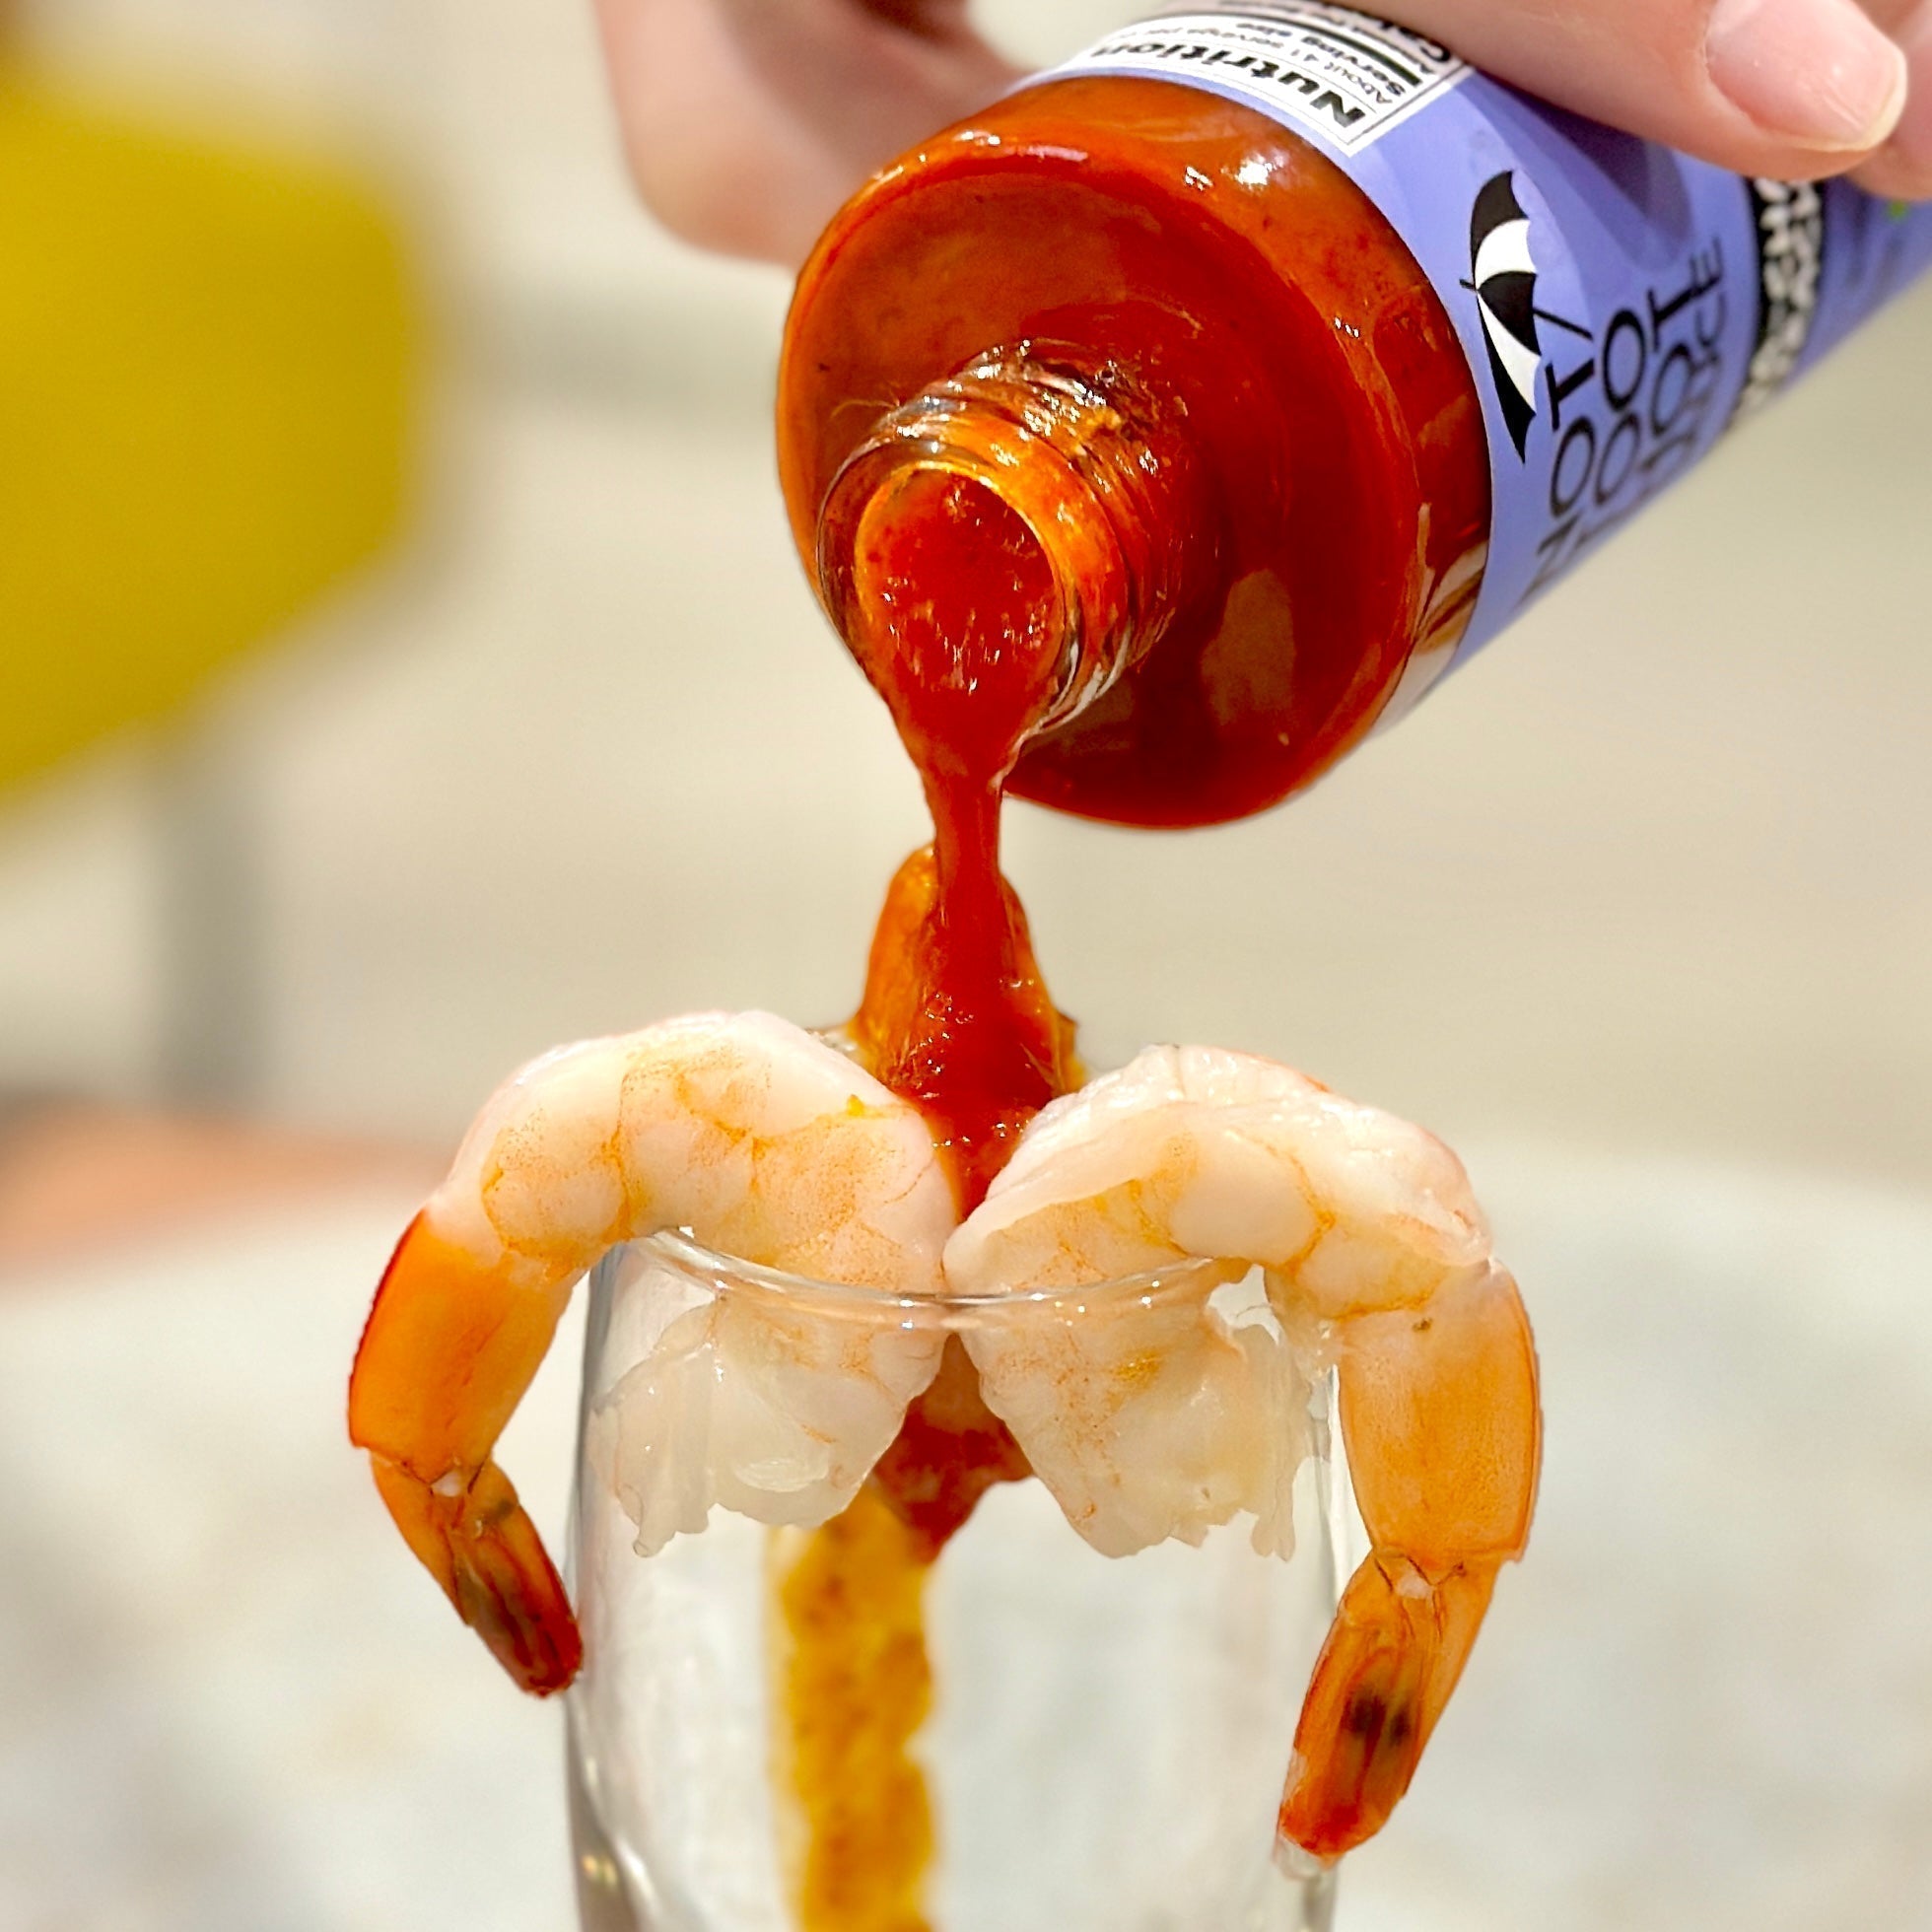 Cha-Cha-Sriracha 7 oz. Sriracha Hot Sauce - Try for $3! Not Too Hot Sauce